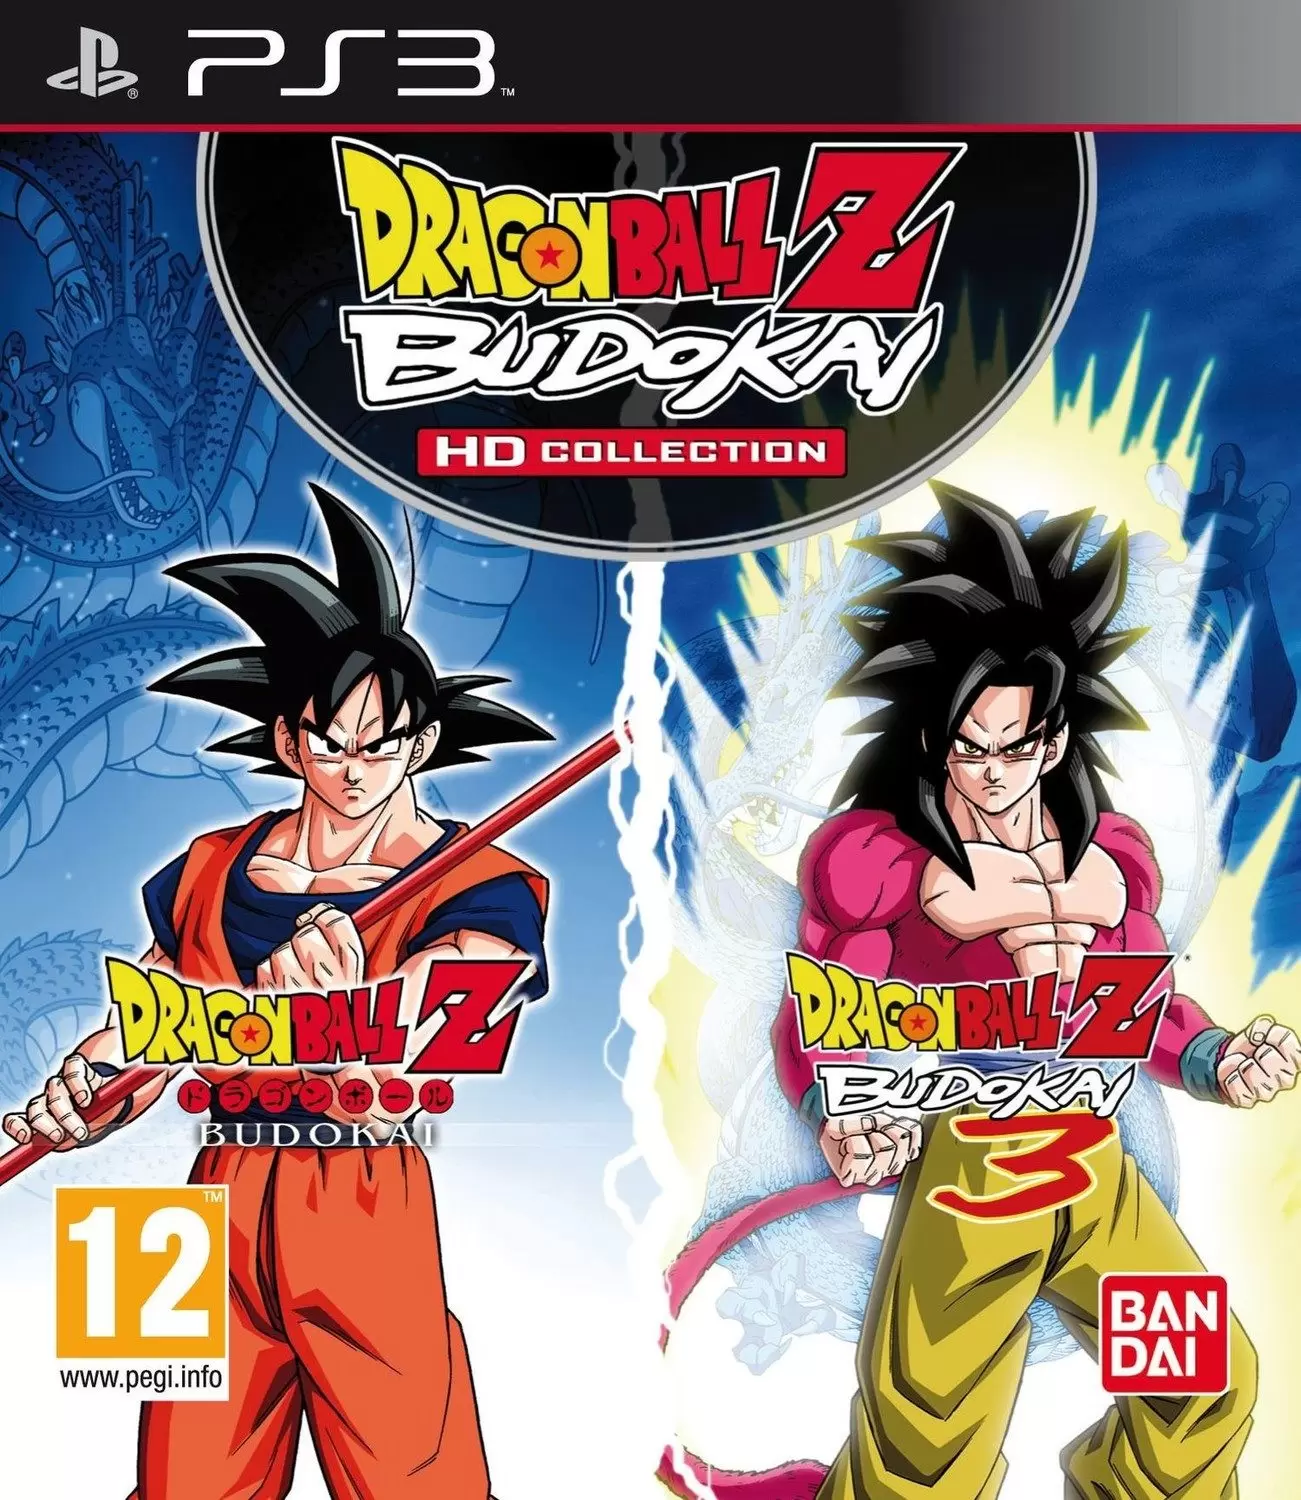 PS3 Games - Dragon Ball Z Budokai HD Collection